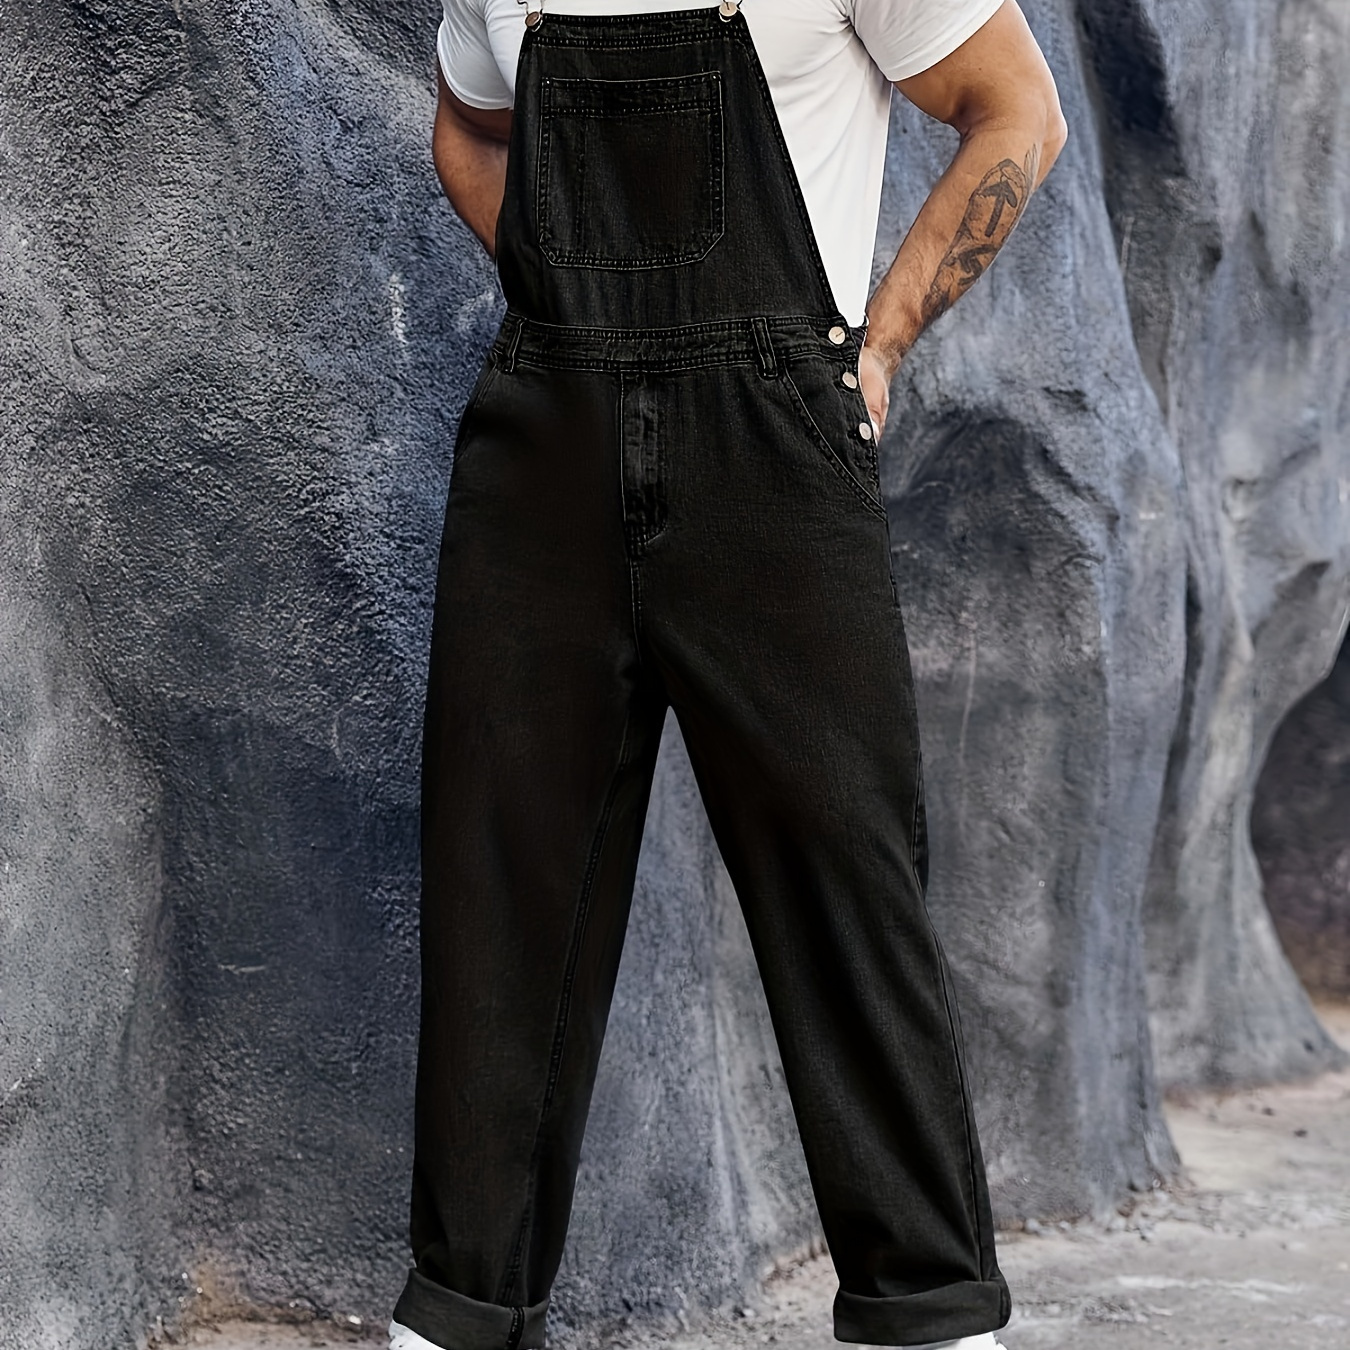 

Men's Casual Denim Slim Fit Boot Cut Bib Overalls Jeans With Adjustable Straps